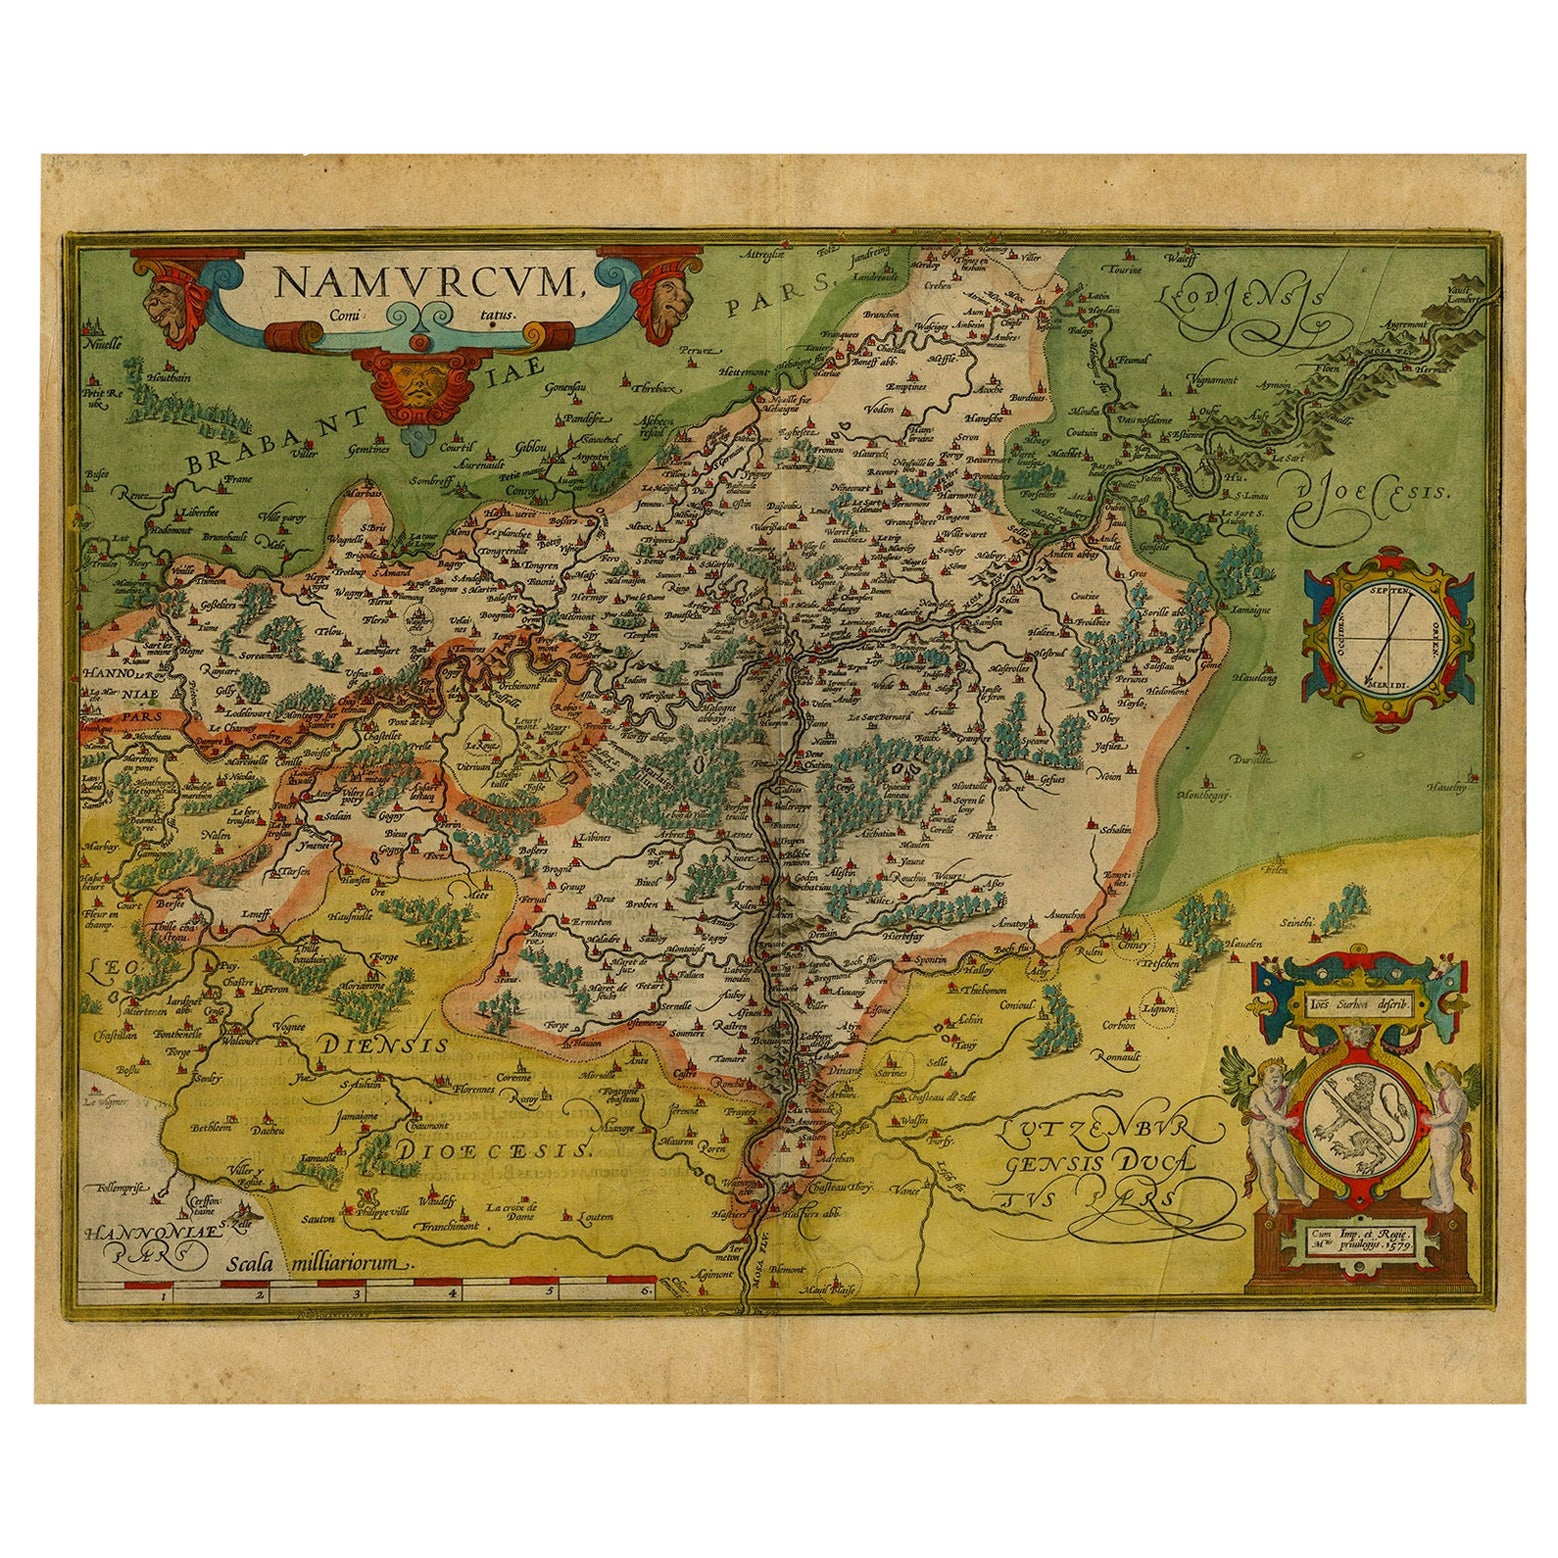 Antique Map of the Namen or Namur Region in Wallonia, Belgium For Sale